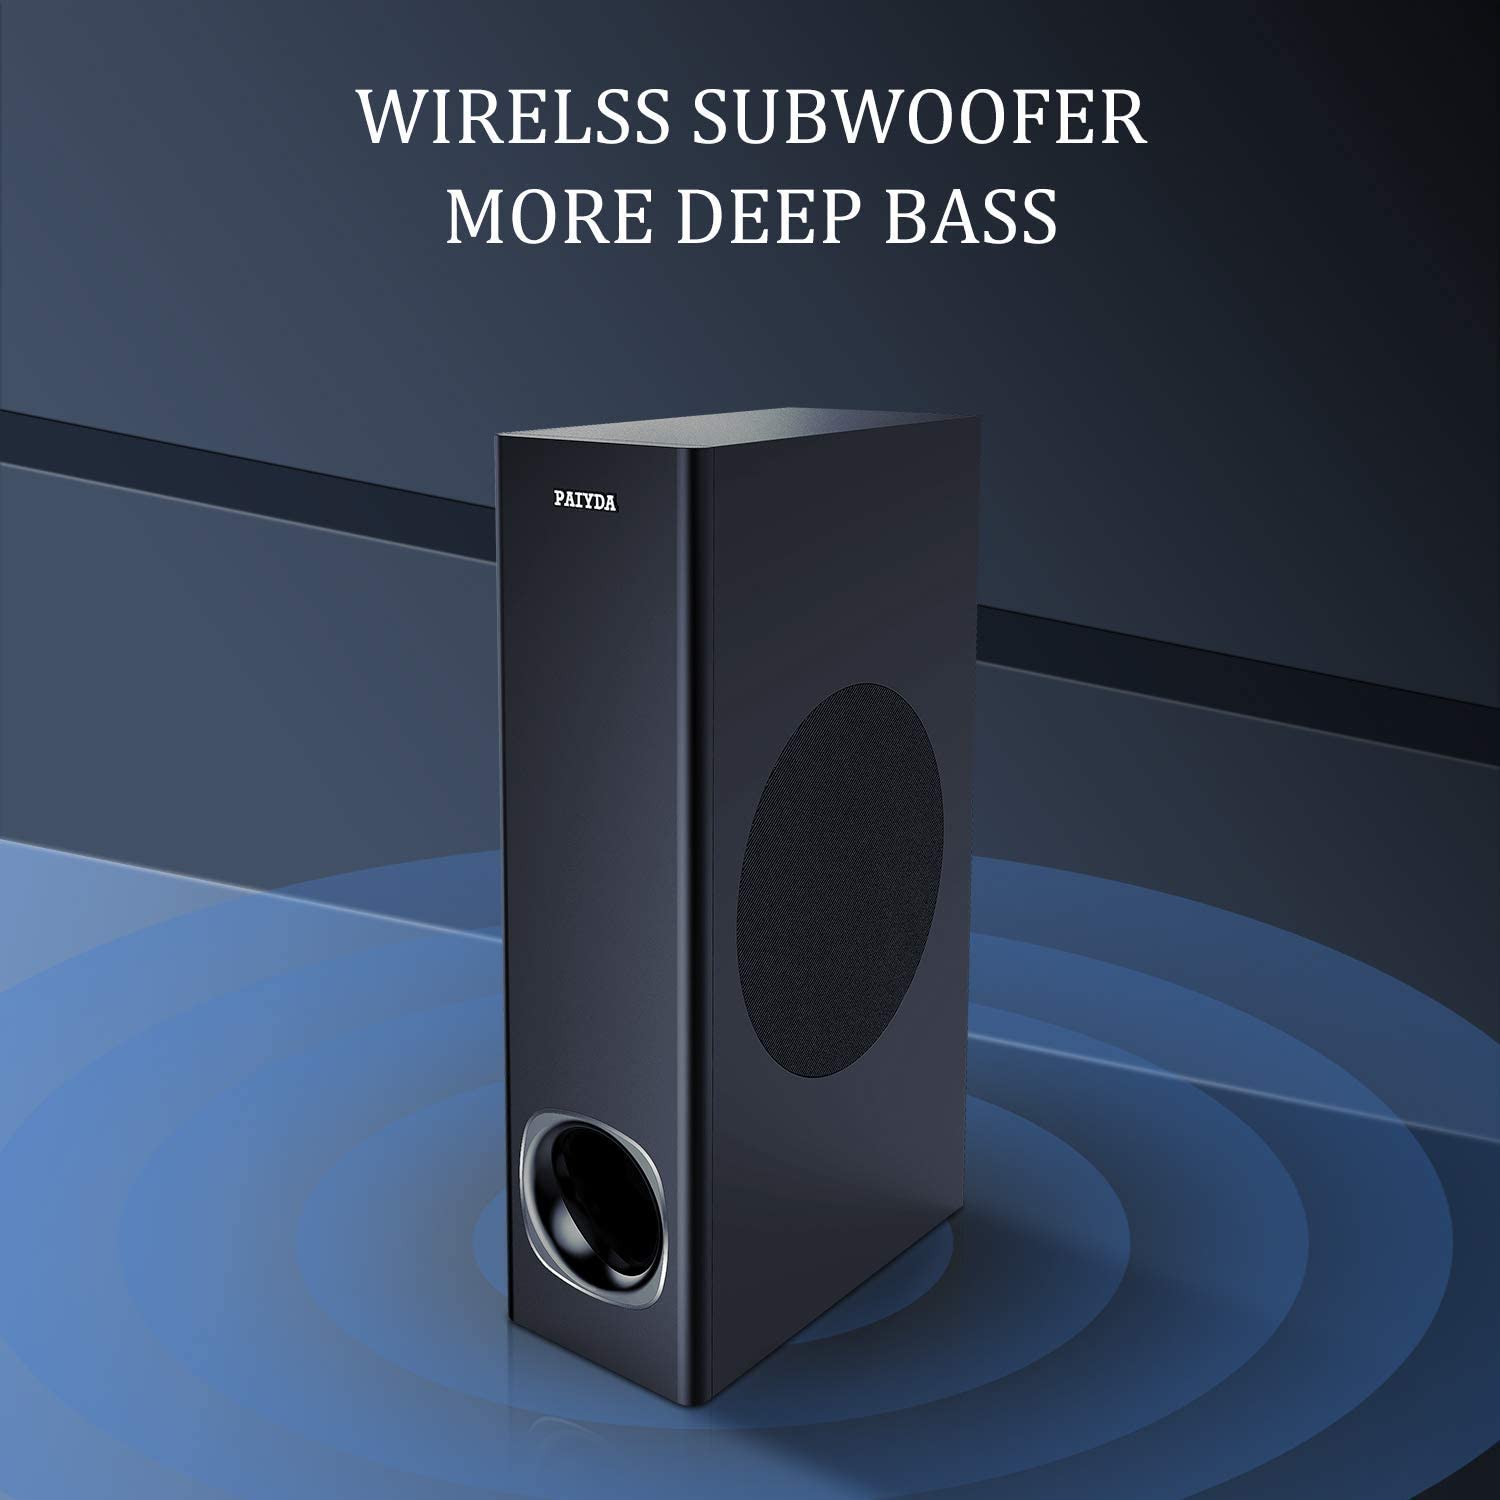 Paiyda 2.1 Channel Soundbar with Subwoofer, 120W Soundbar for TV, 120 dB Strong Bass Surround Sound System